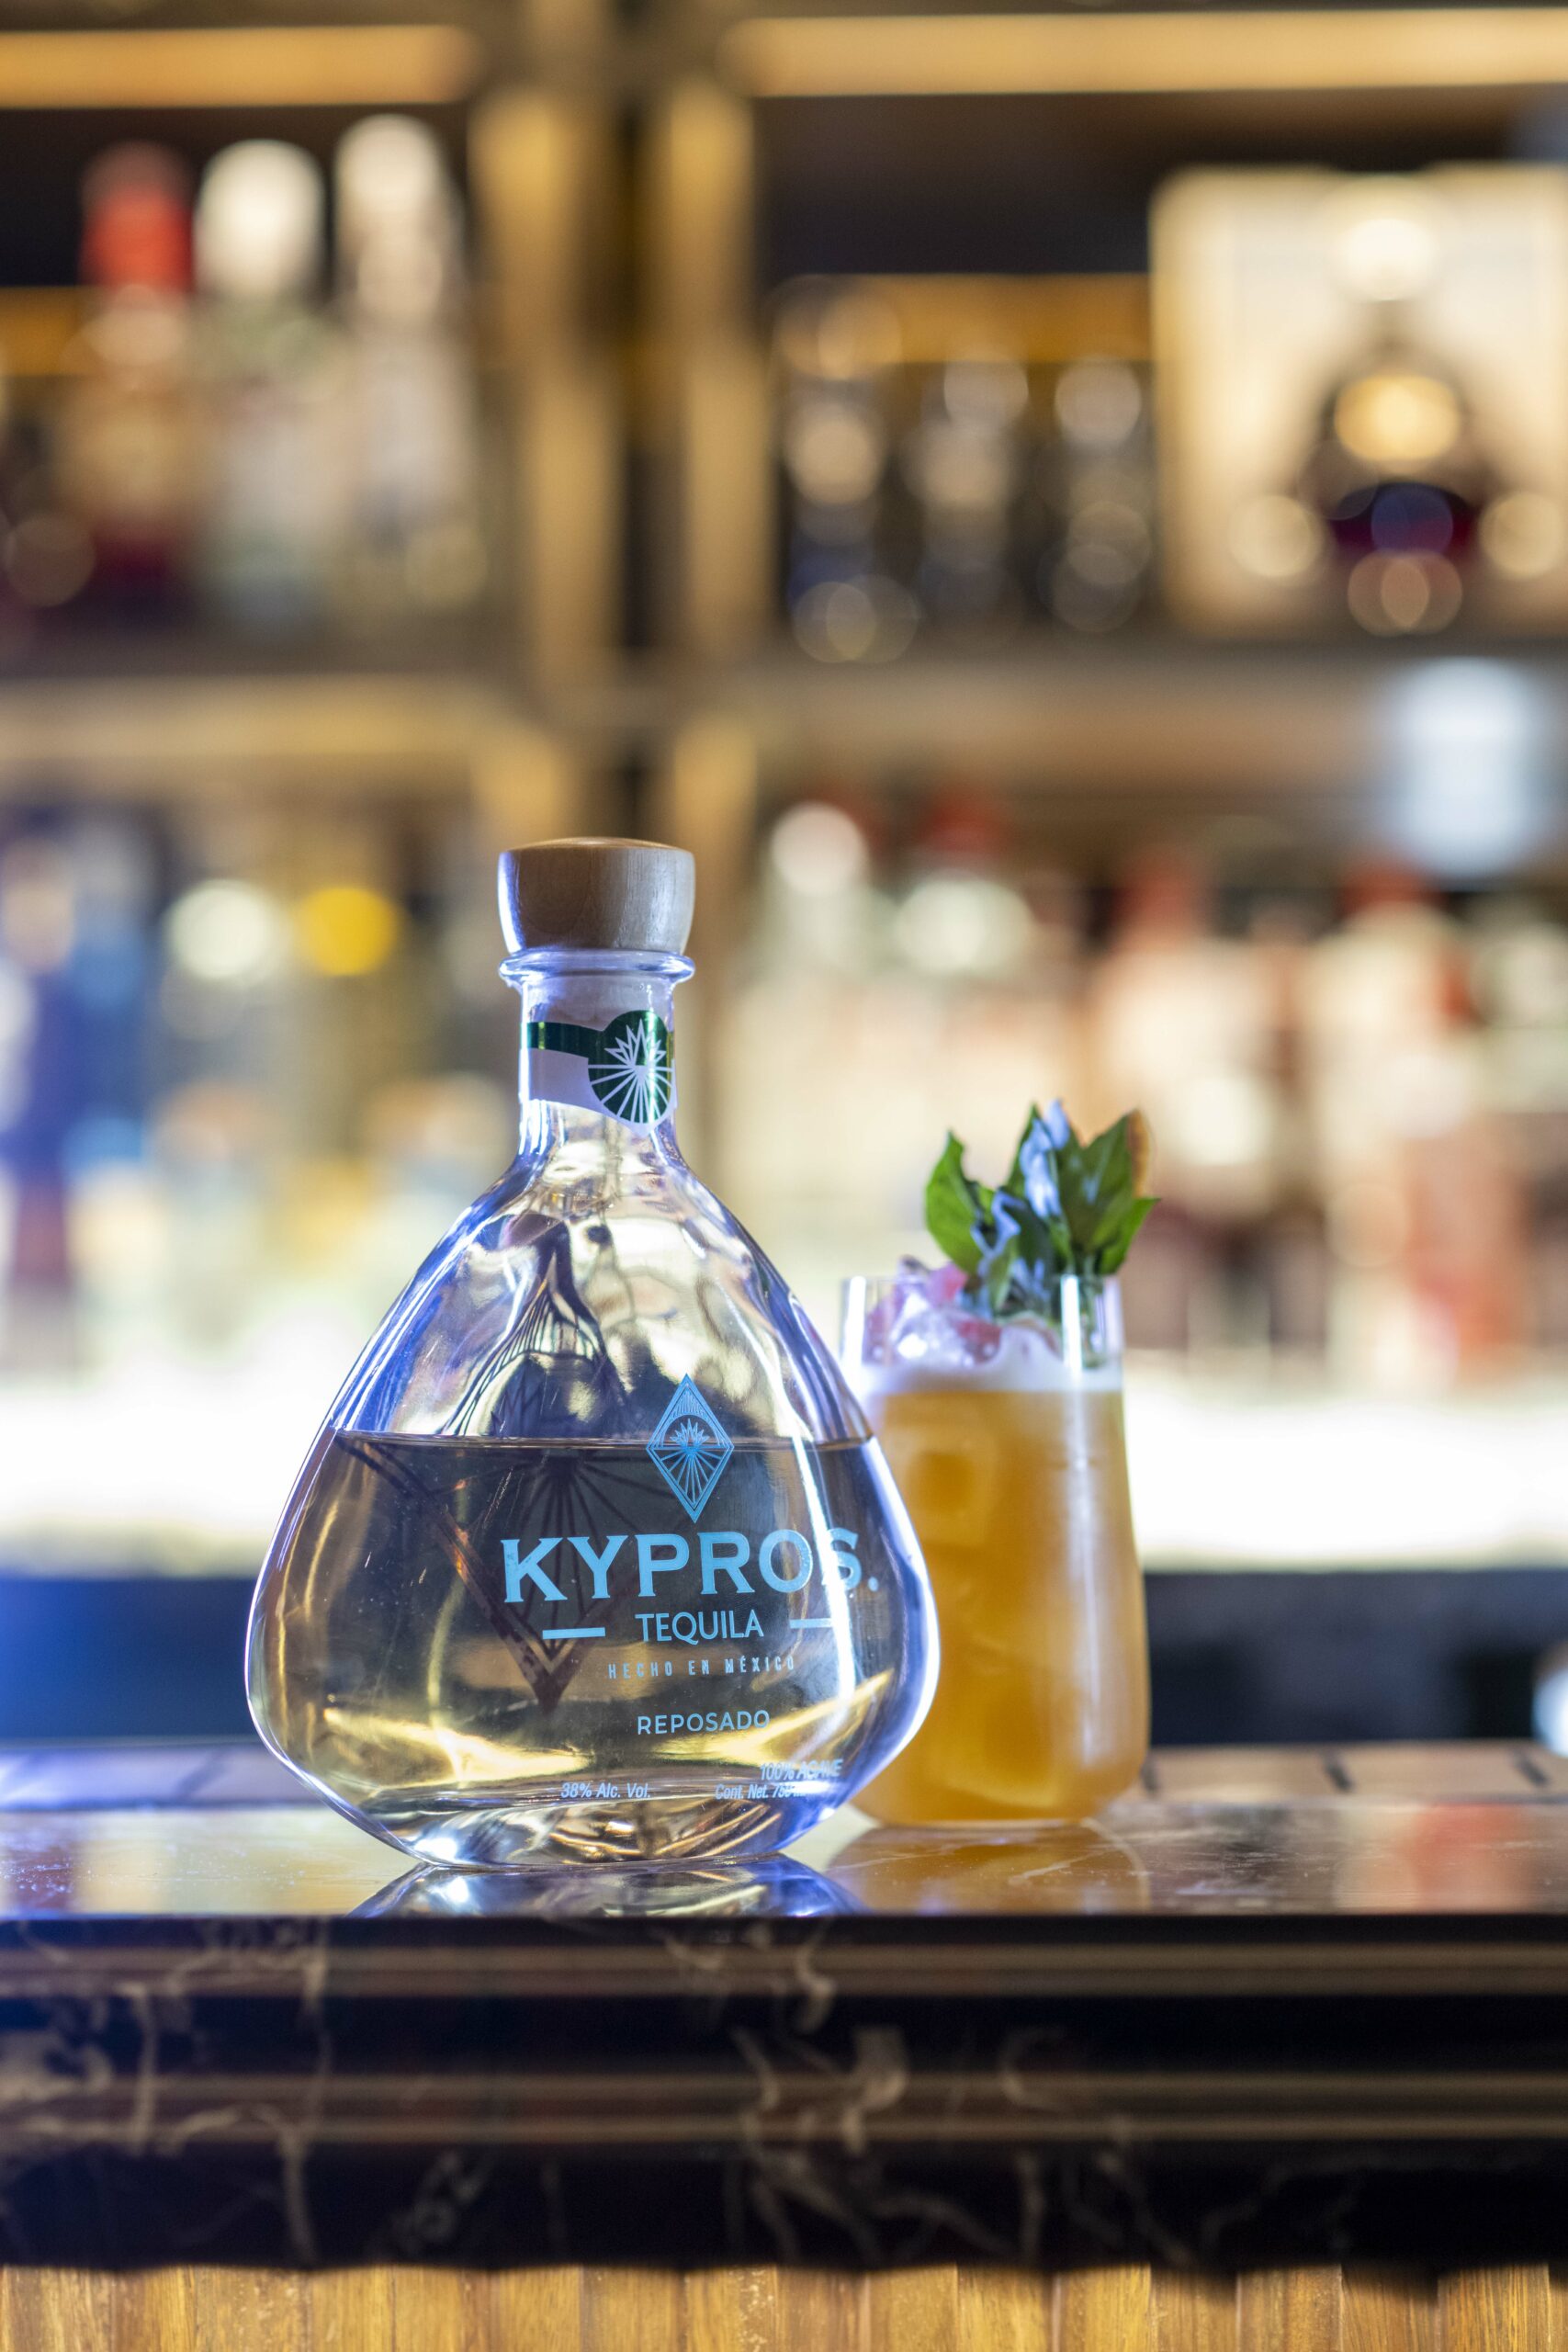 Tres cócteles para refrescarte en verano con tequila Kypros